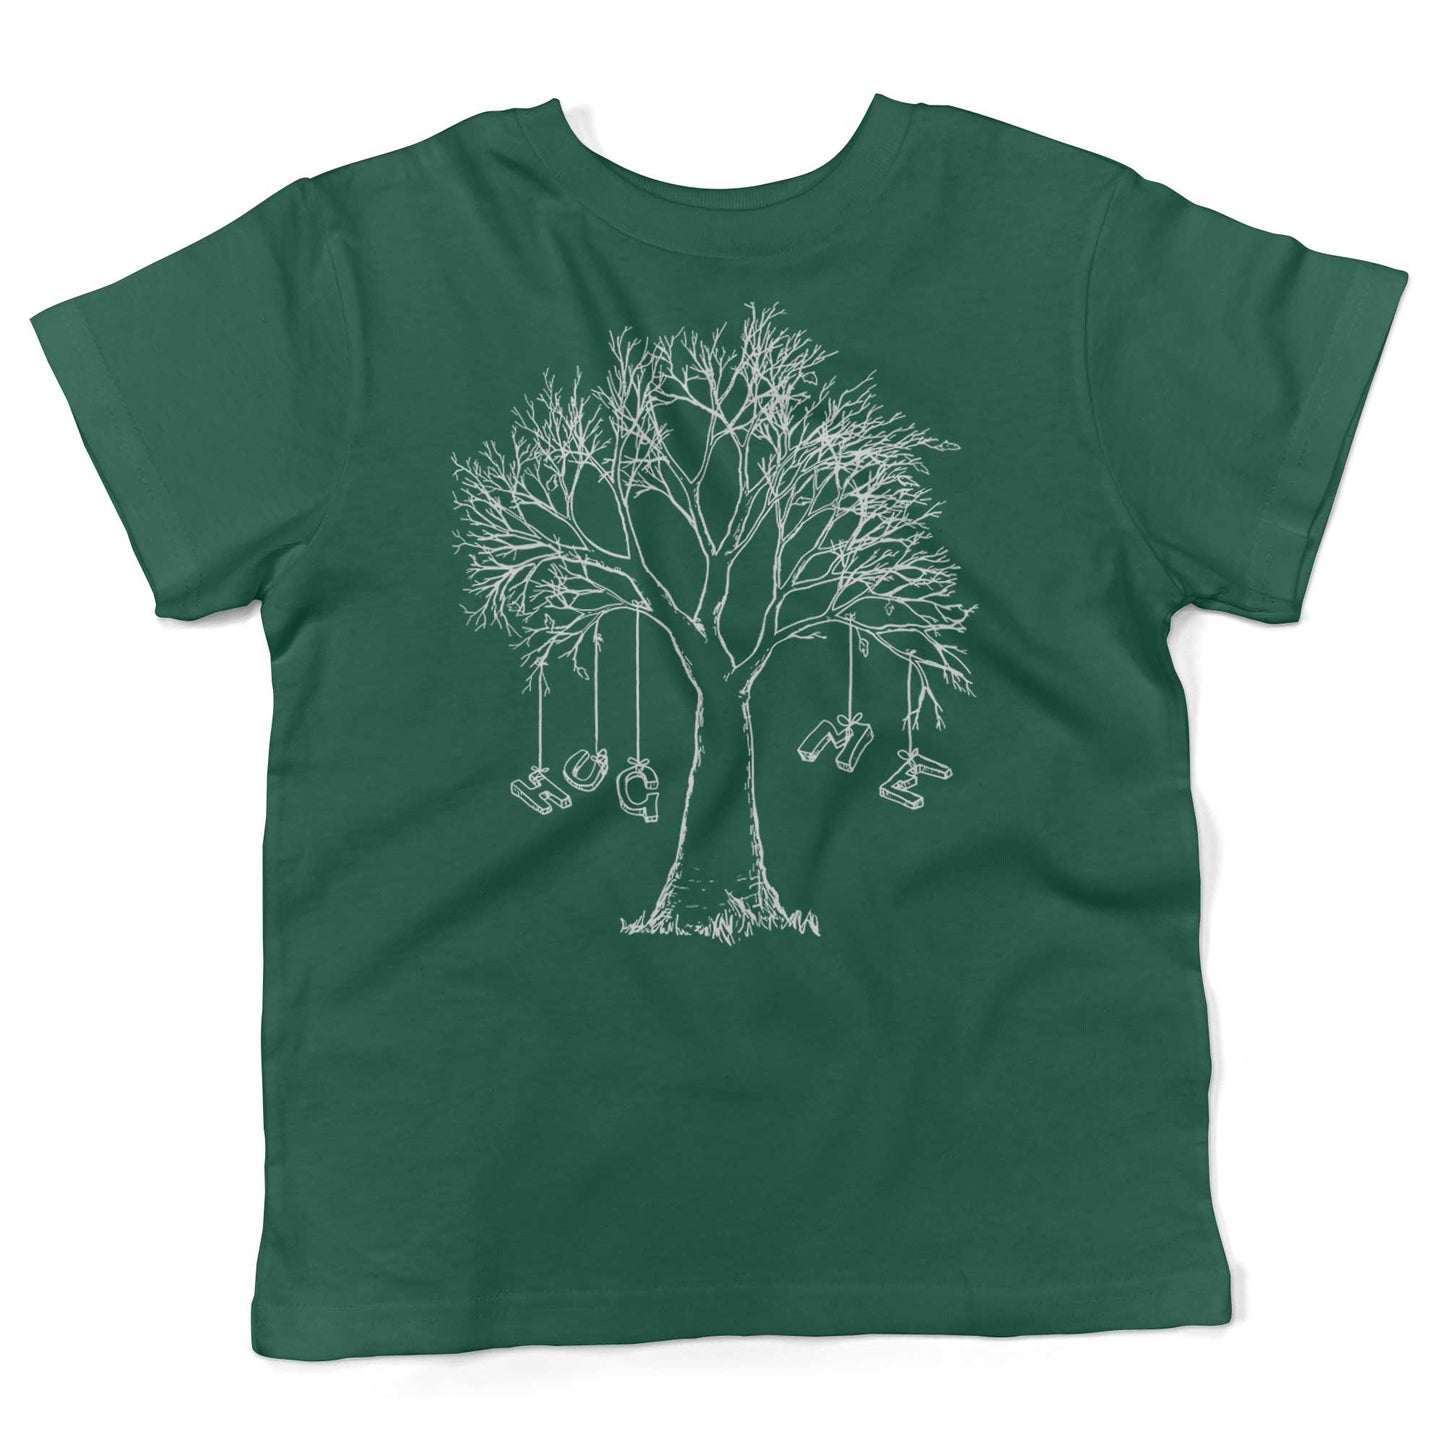 Hug A Tree Toddler Shirt-Kelly Green-2T